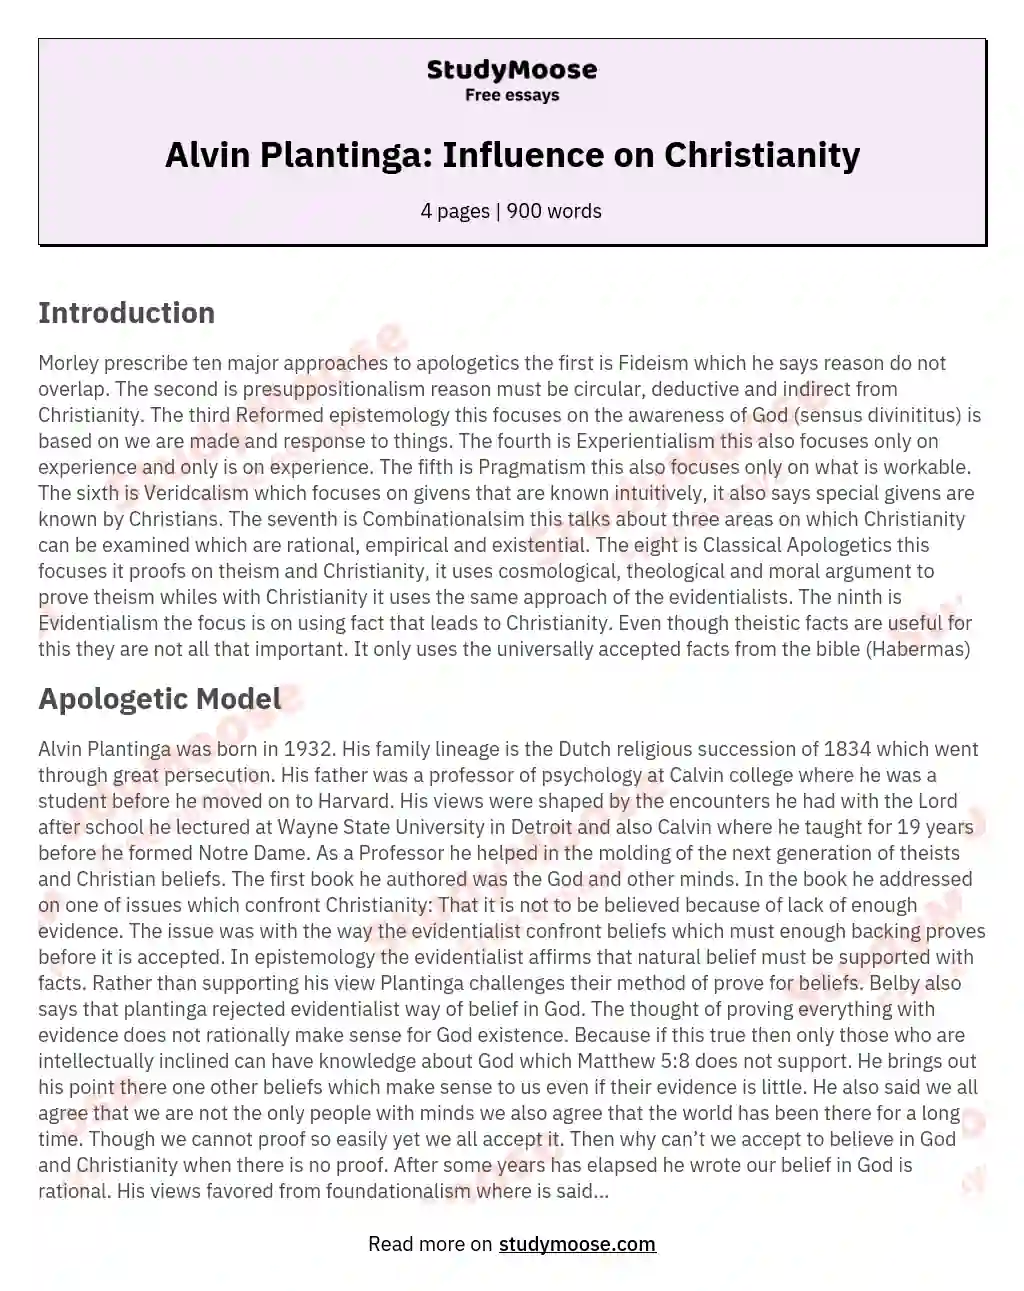 Alvin Plantinga: Influence on Christianity